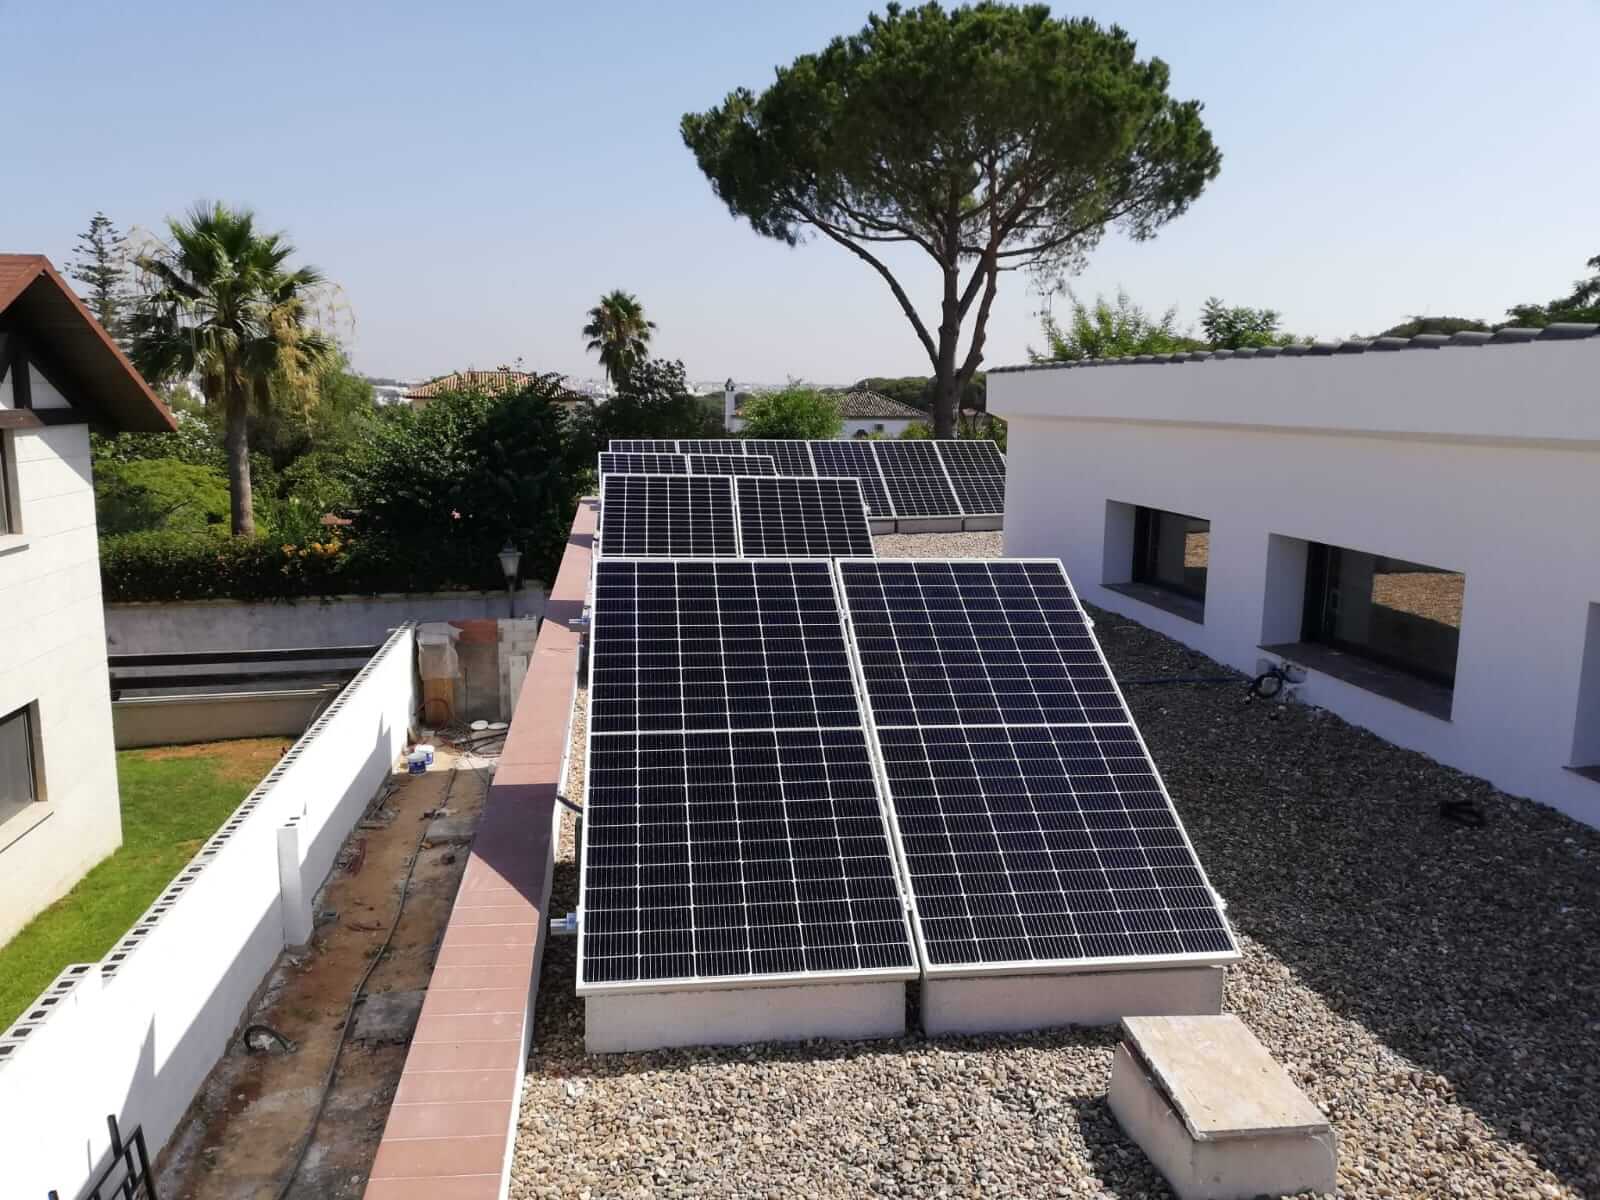 Placas solares para autoconsumo fotovoltaico en Huelva quantum